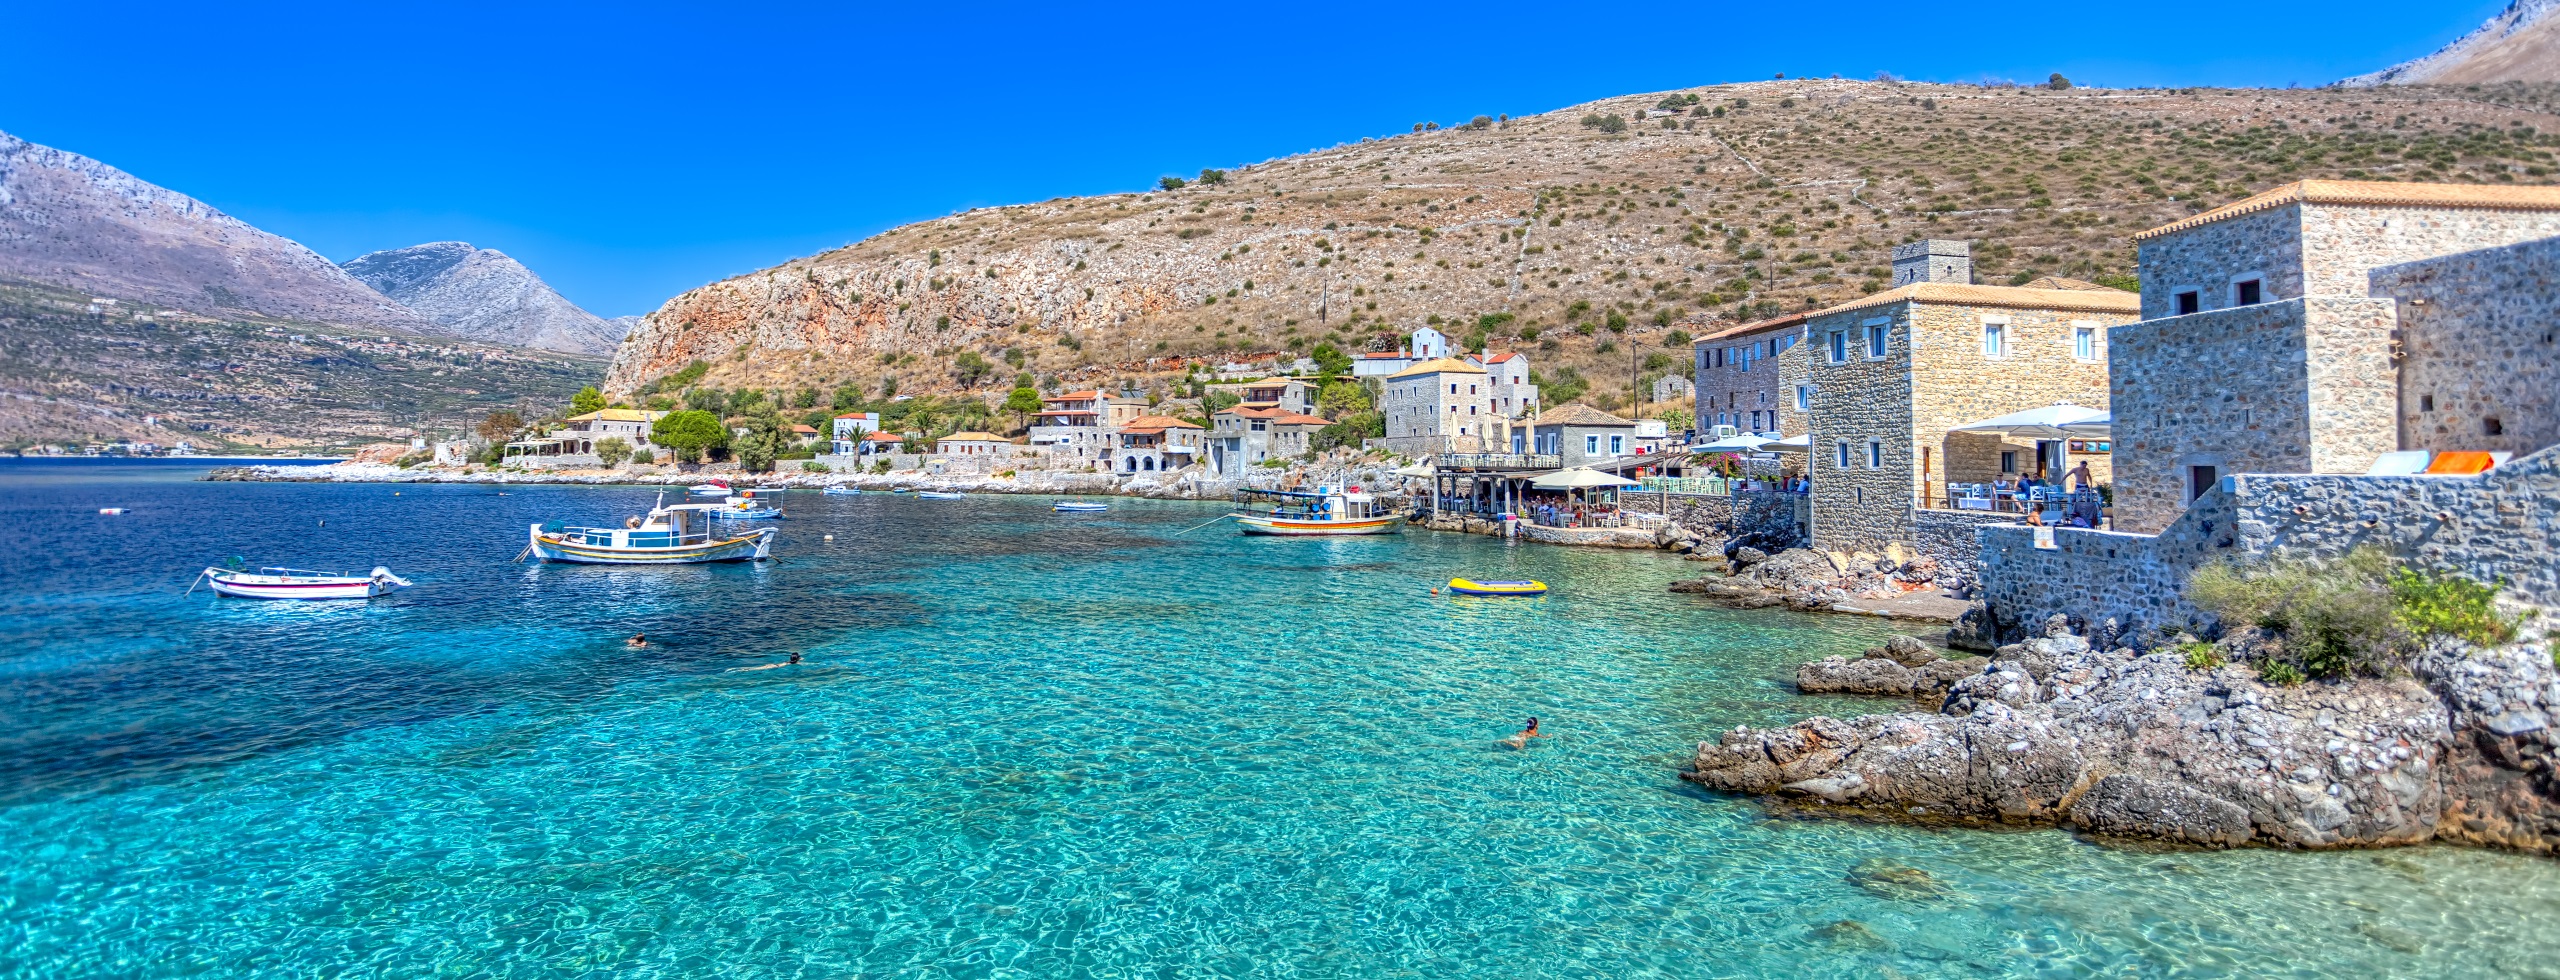 peloponnese greece travel guide